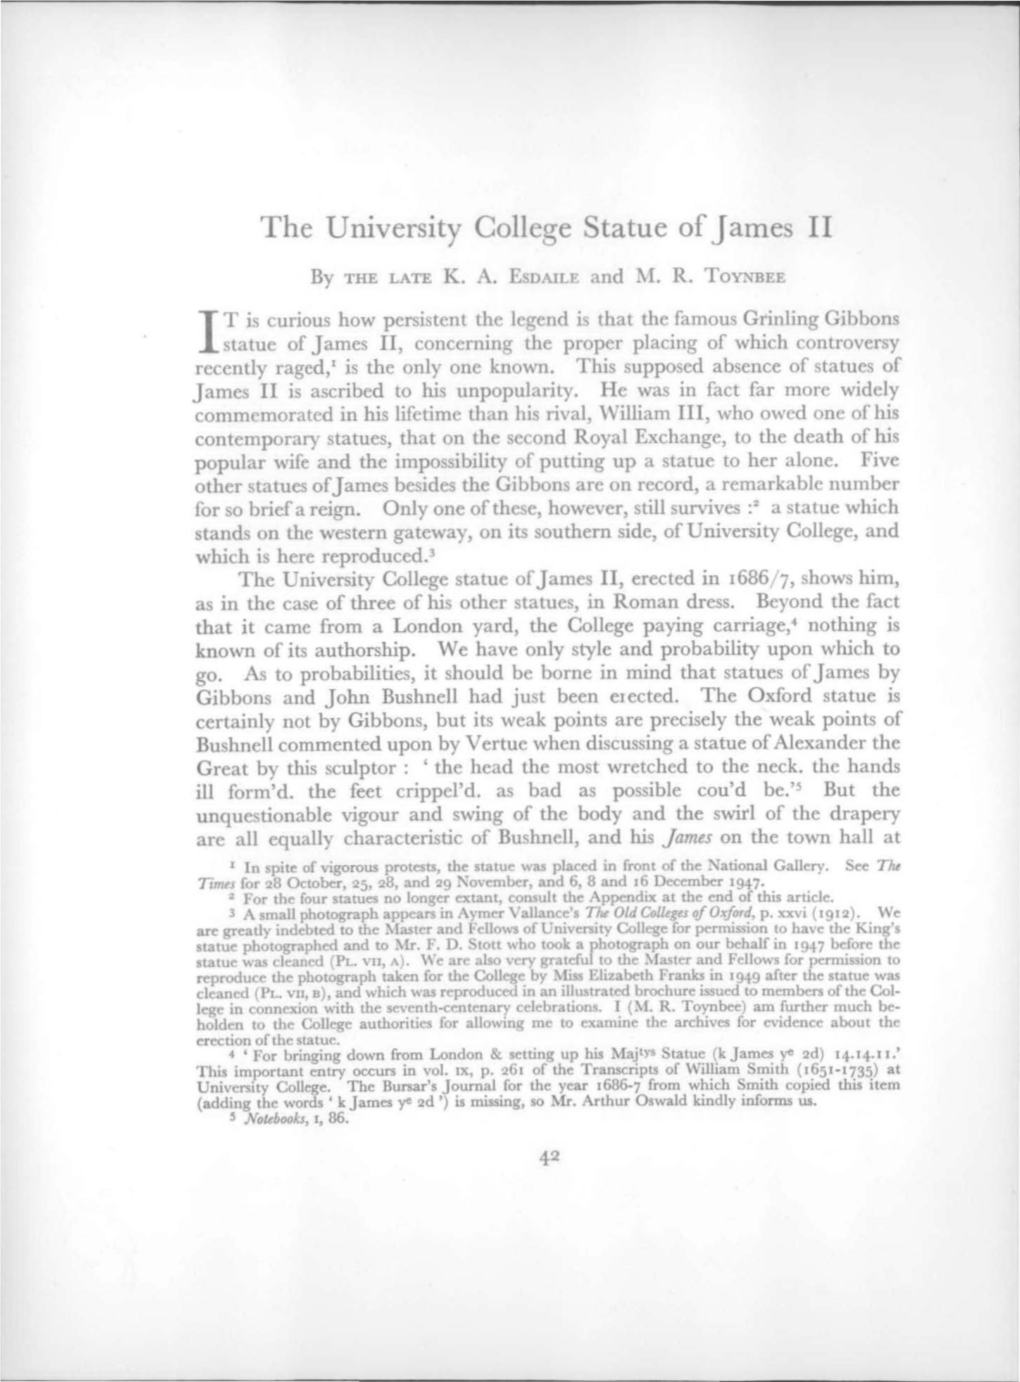 The University College Statue of James II